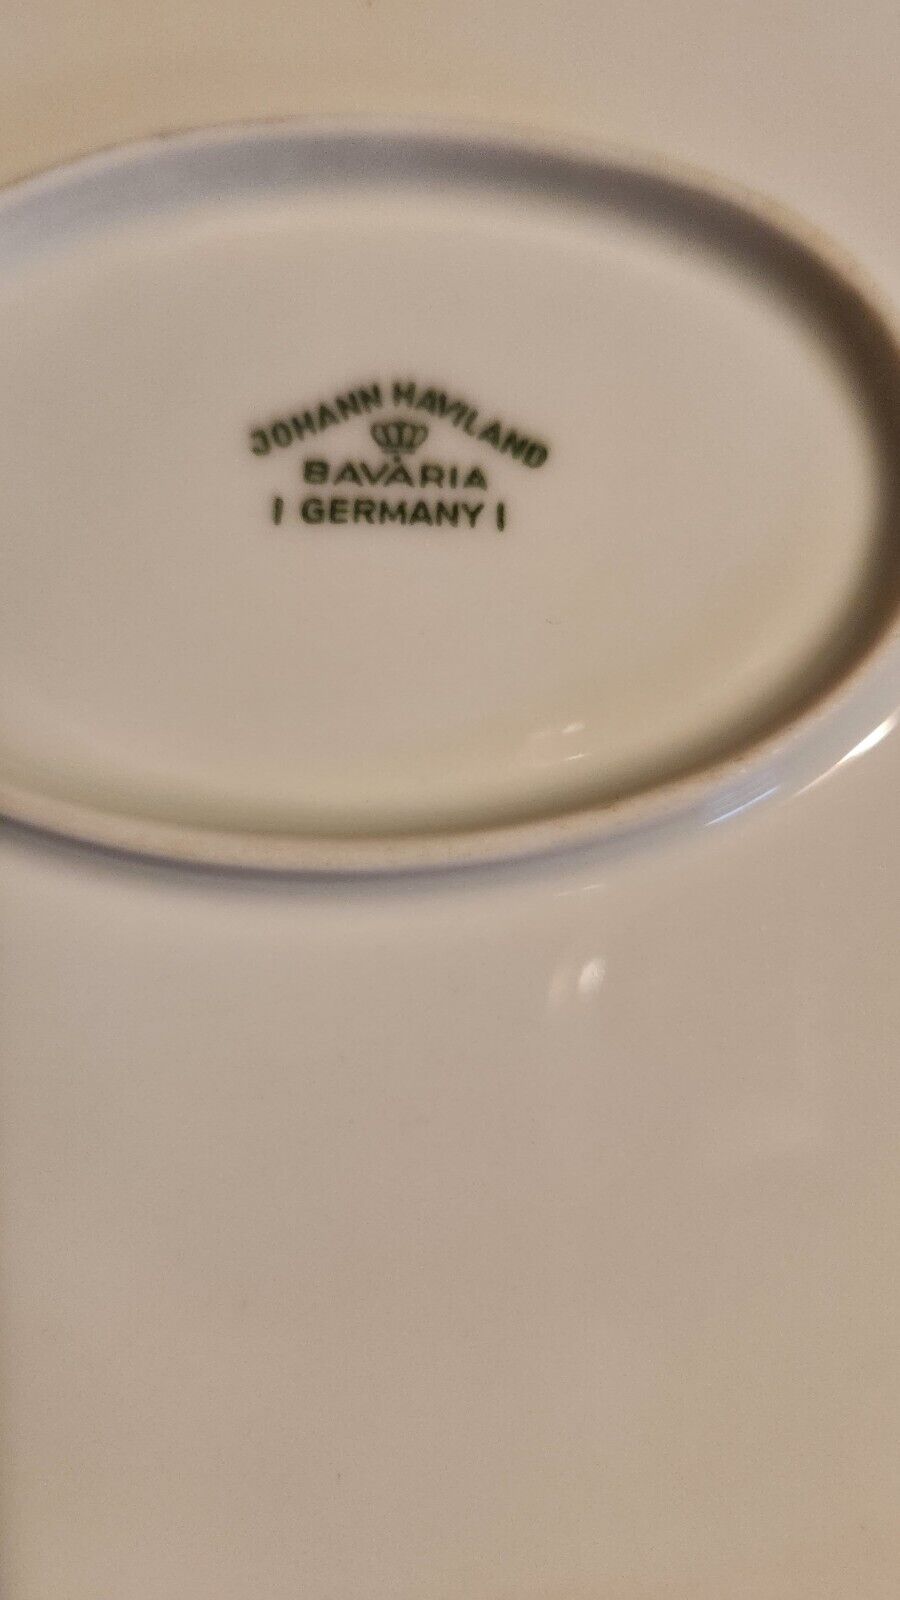 vintage johann haviland bavaria germany china set